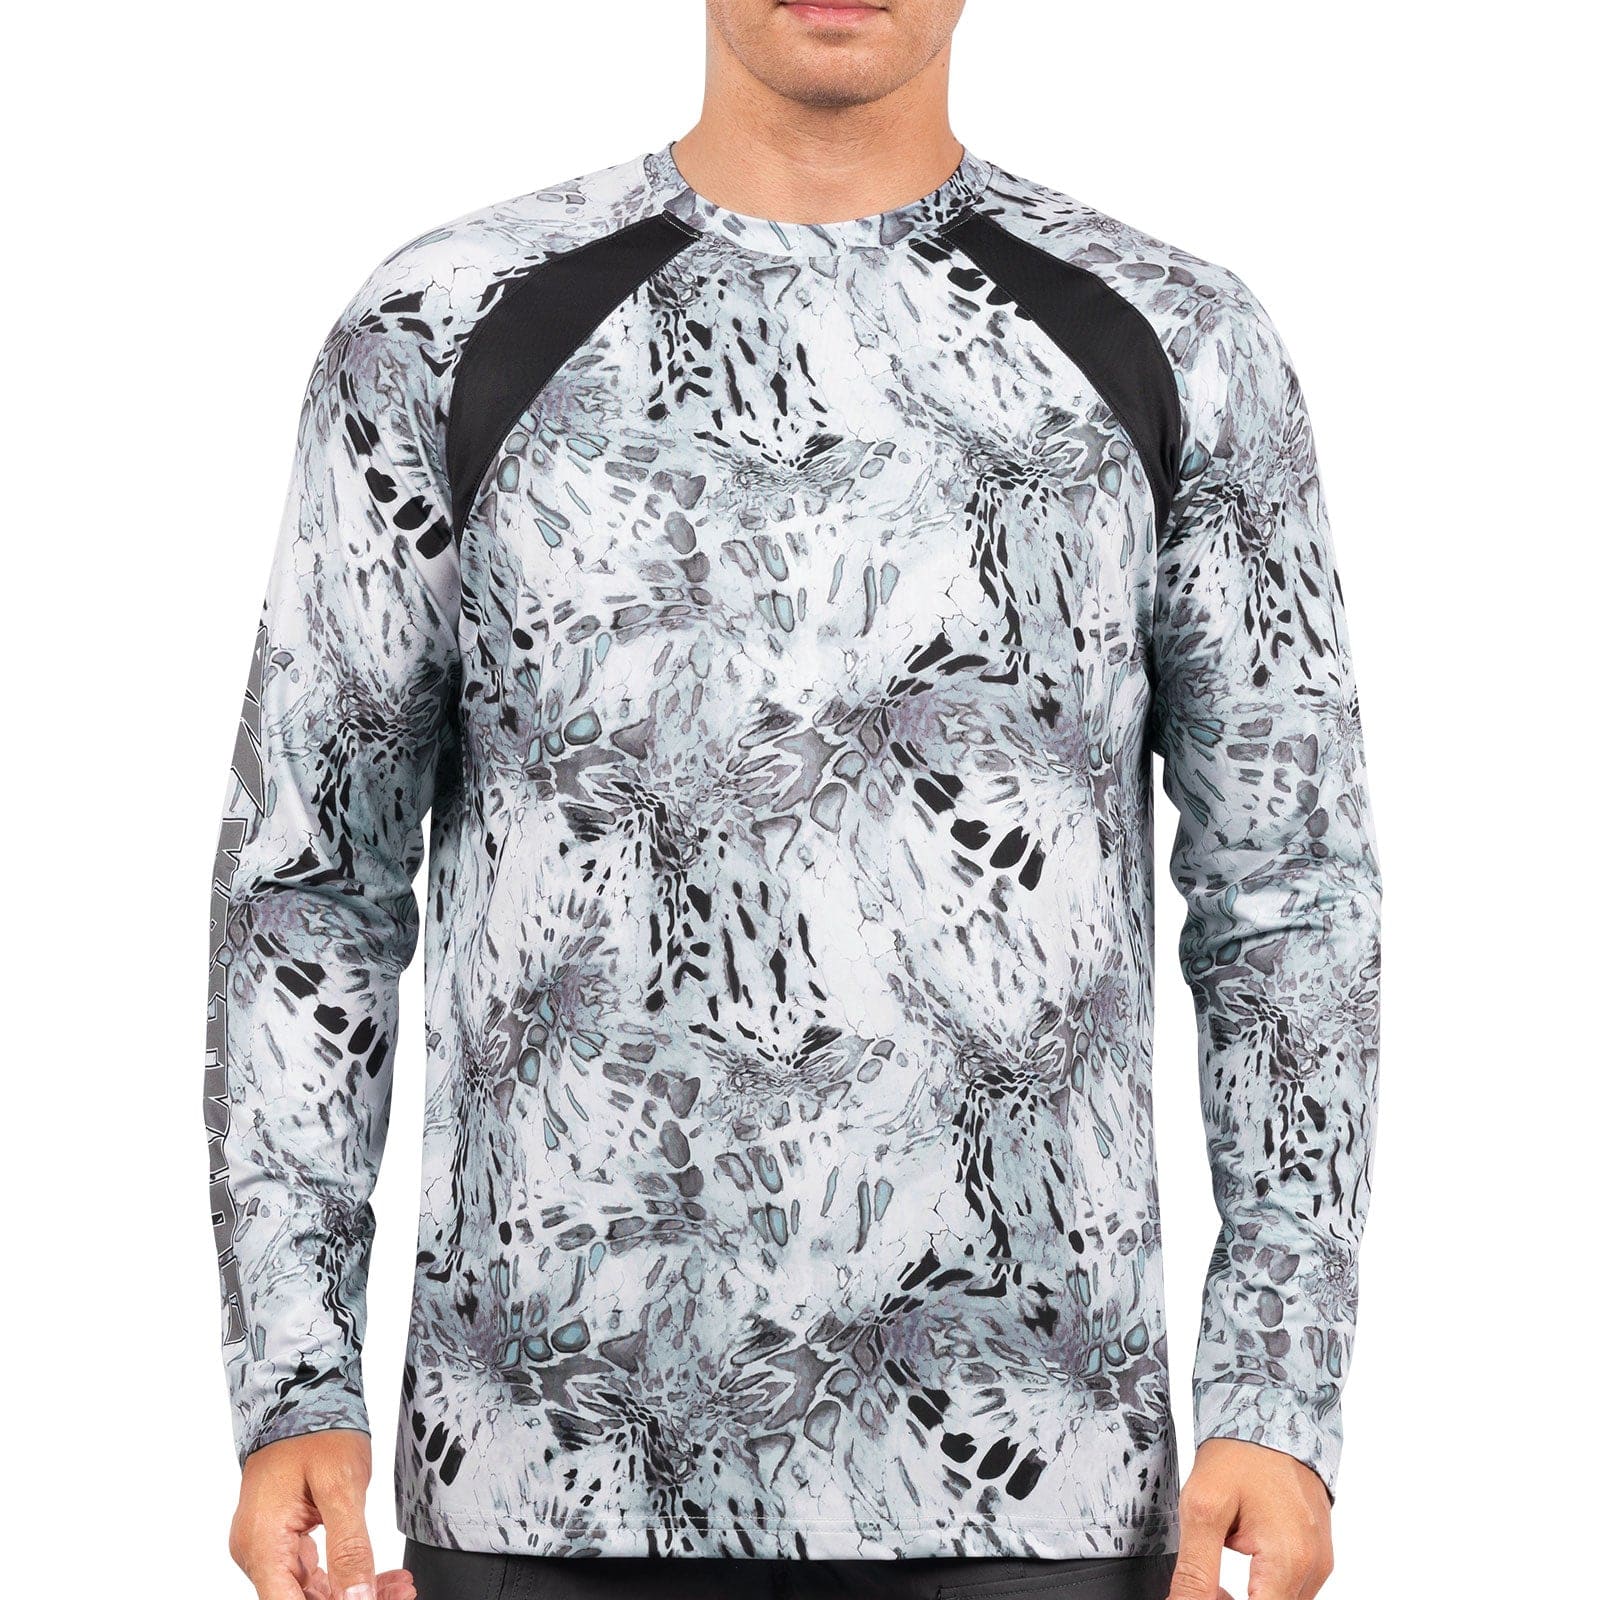 KastKing Sol Armis UPF 50 Long Sleeve Fishing Shirts - Prym1-Silver Mist / S